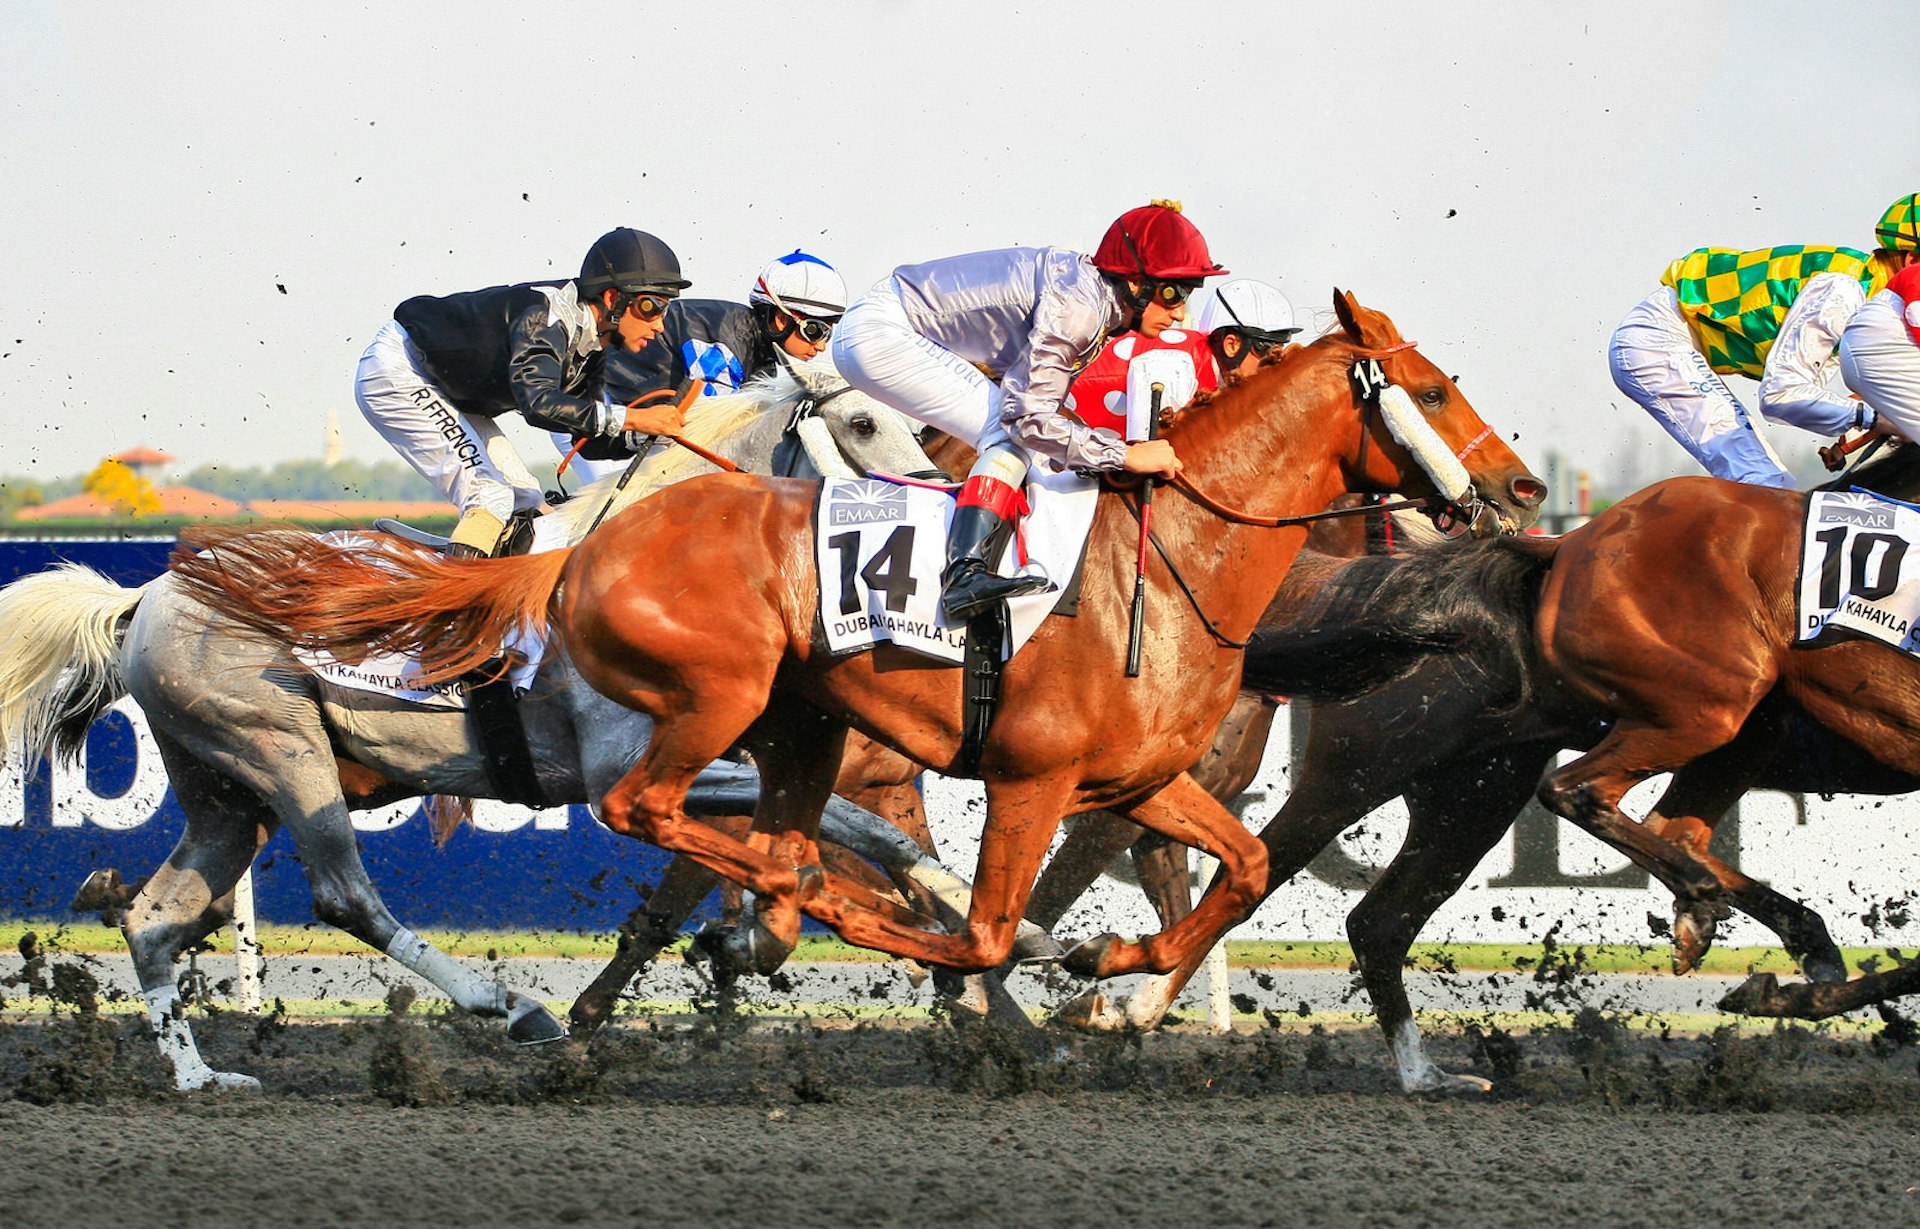 Horse race in Dubai. Image by Sukhanova Daria / Shutterstock